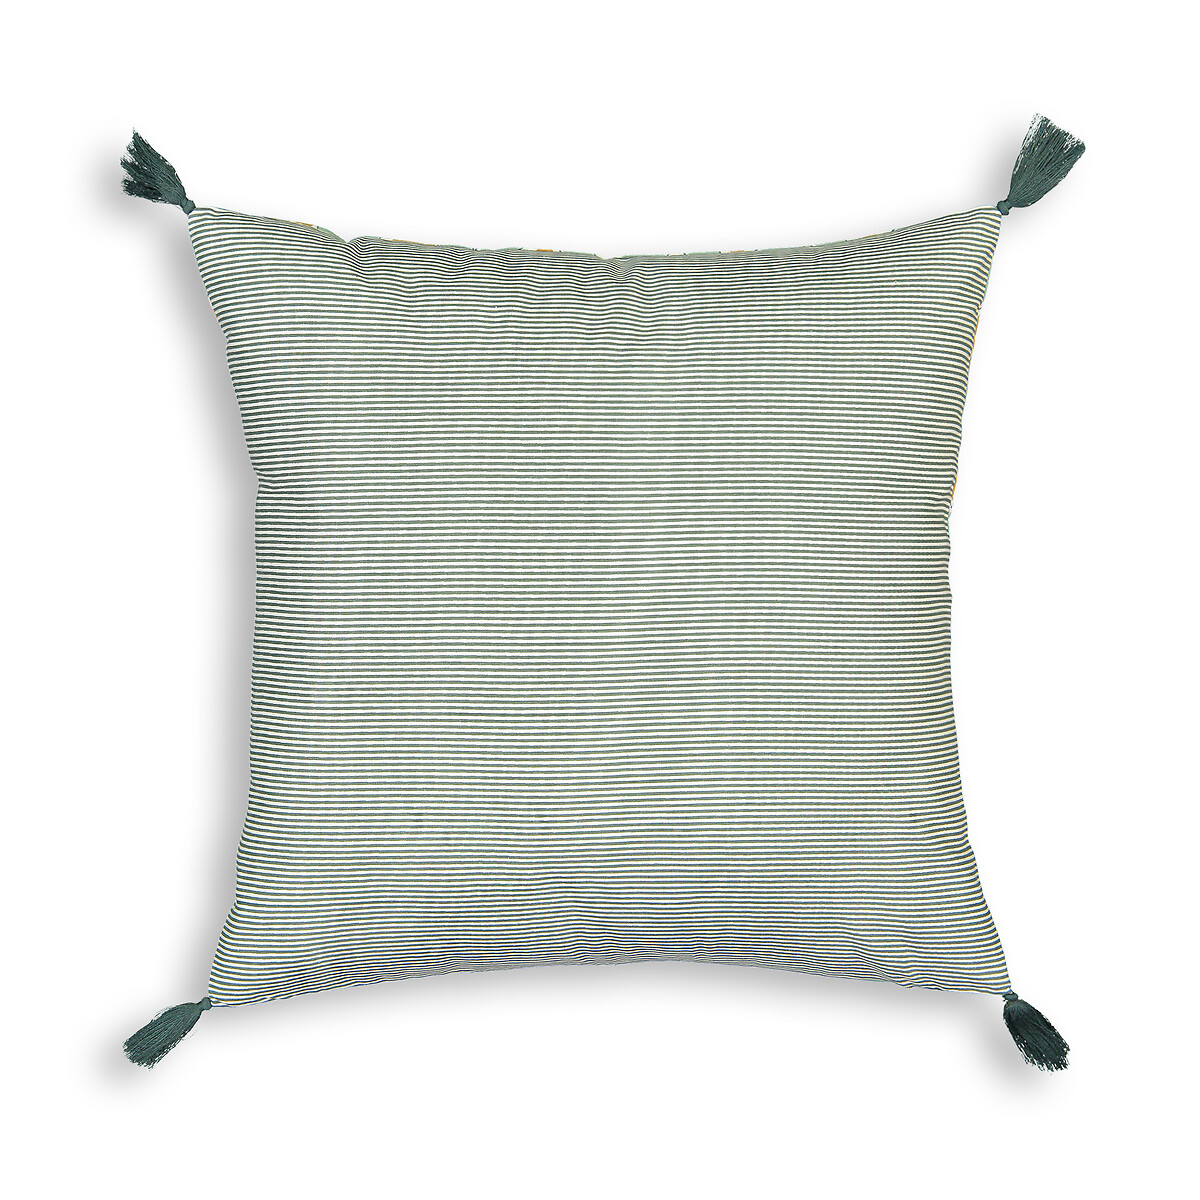 Чехол LaRedoute На подушку из 100 стираного хлопка Cilou 40 x 40 см зеленый, размер 40 x 40 см - фото 4